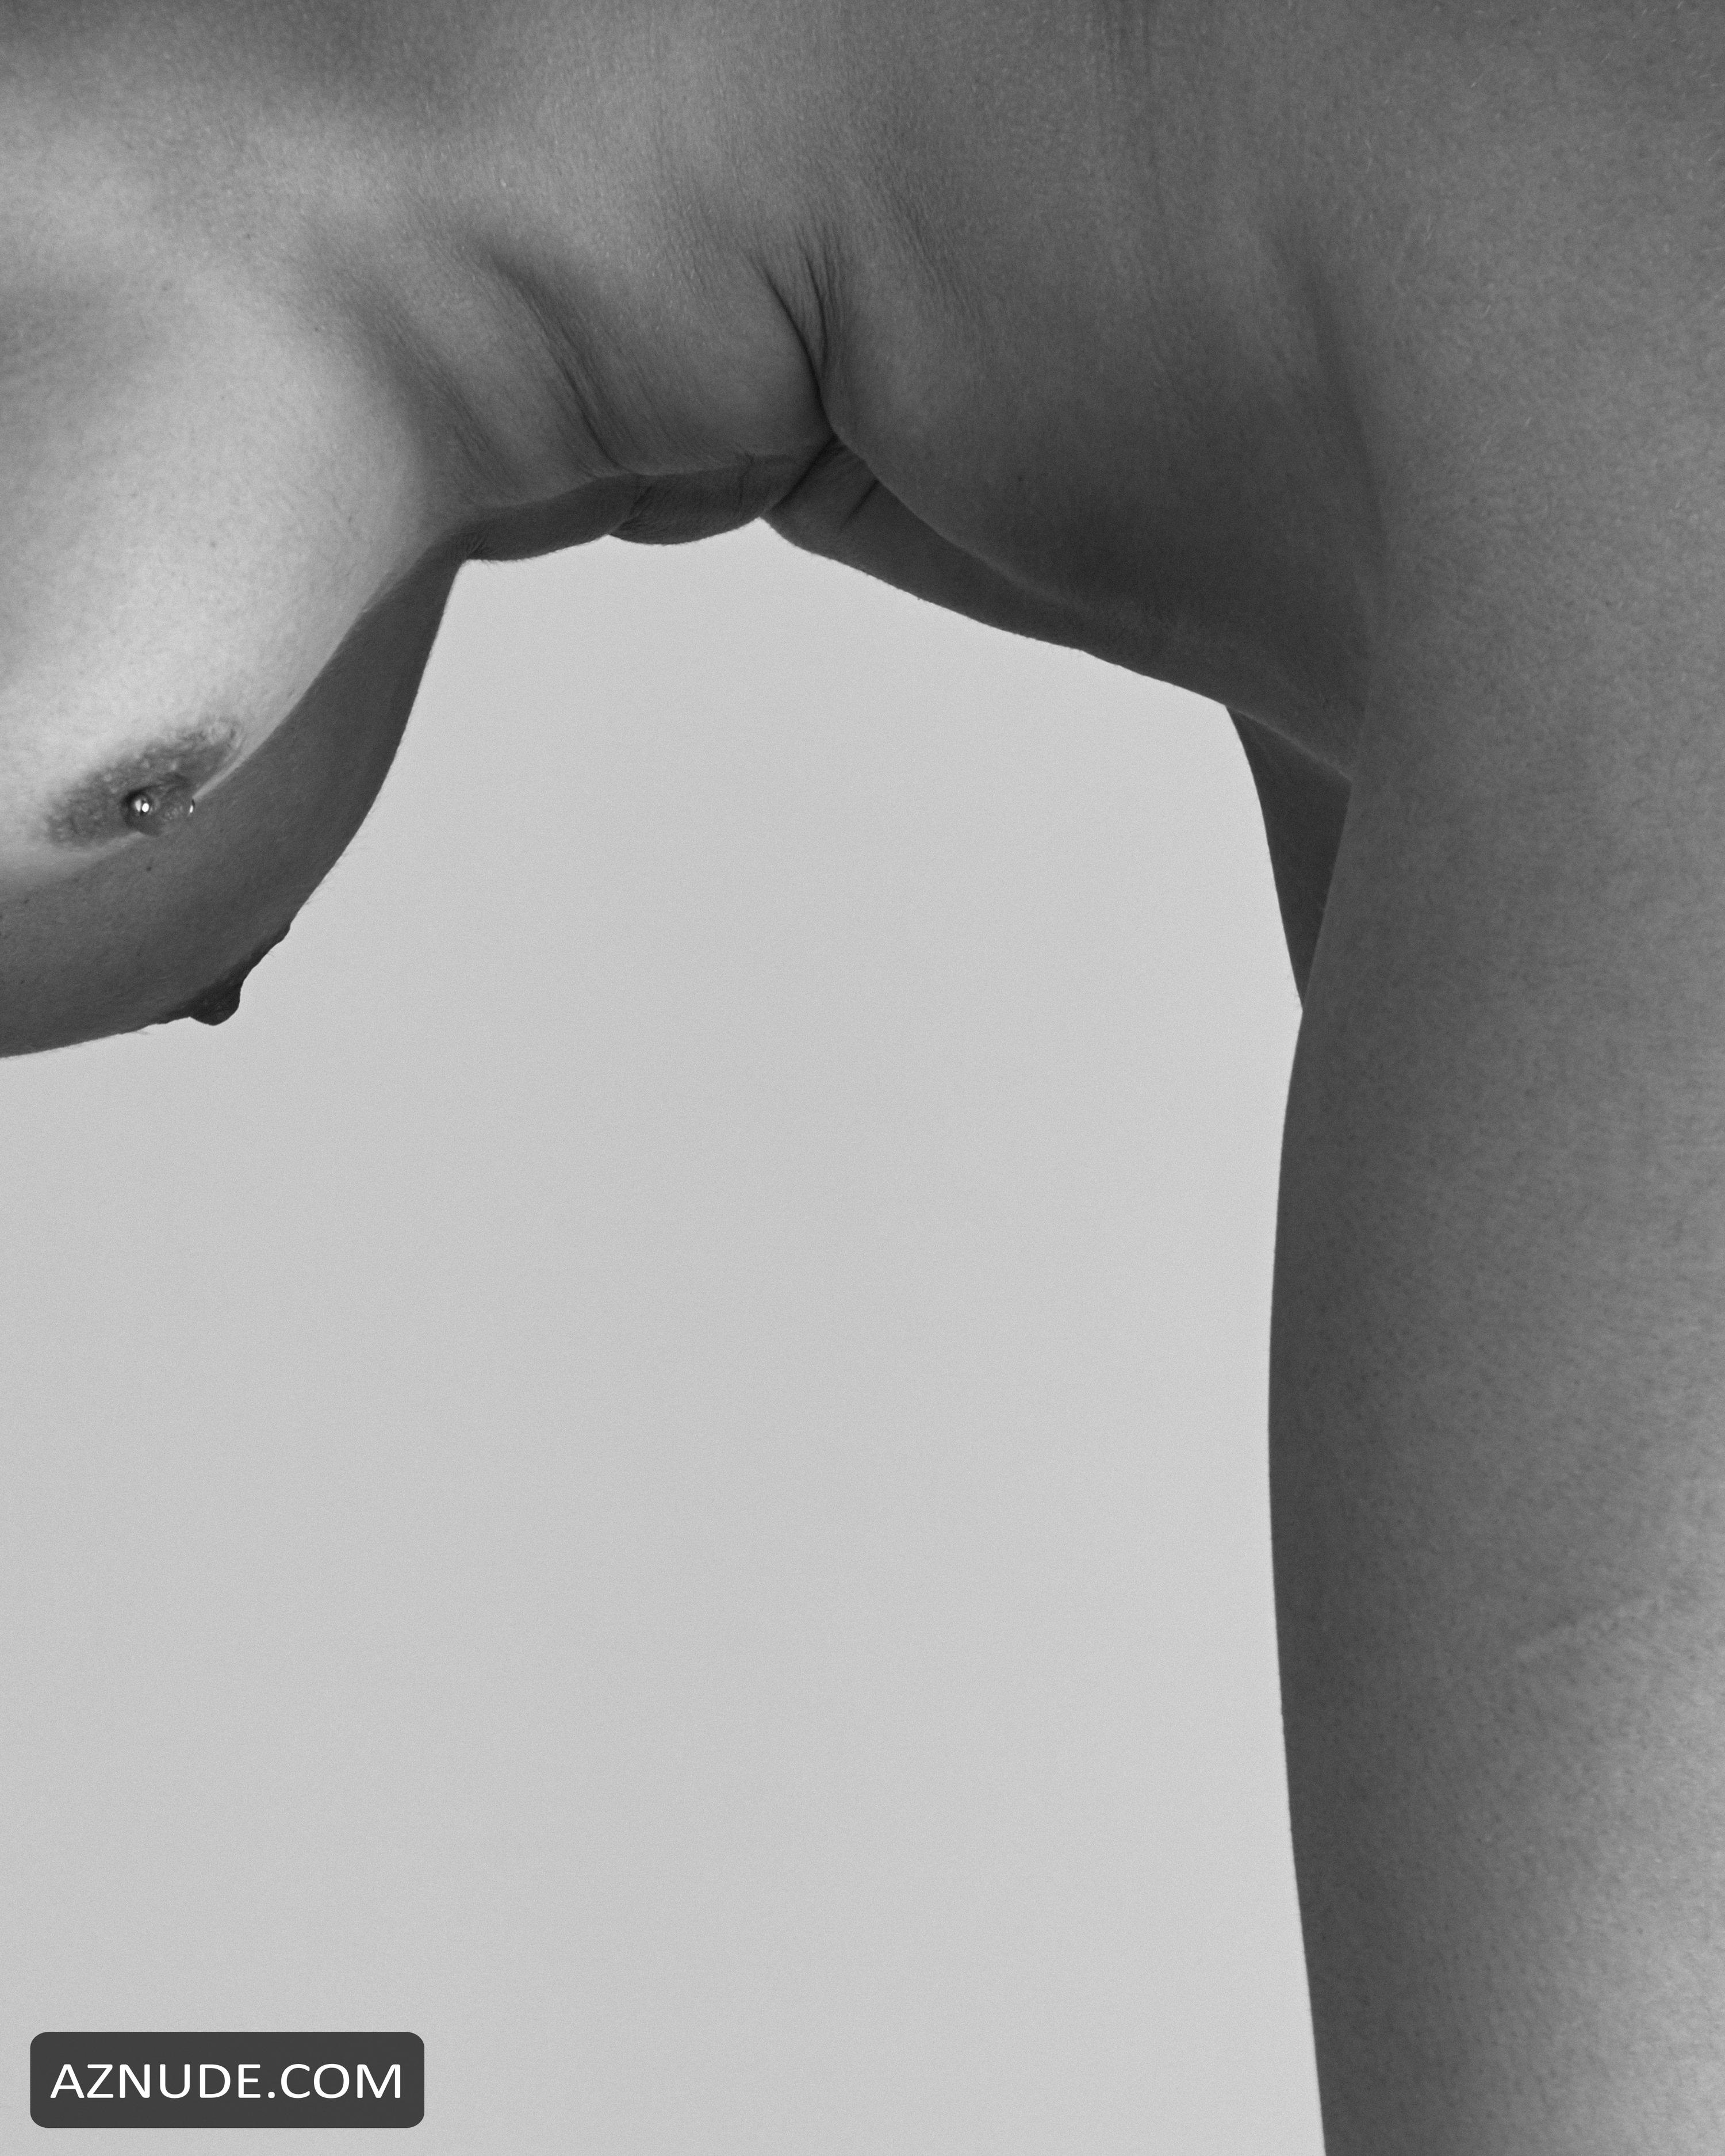 Jehane Paris boobs | Naked body parts of celebrities